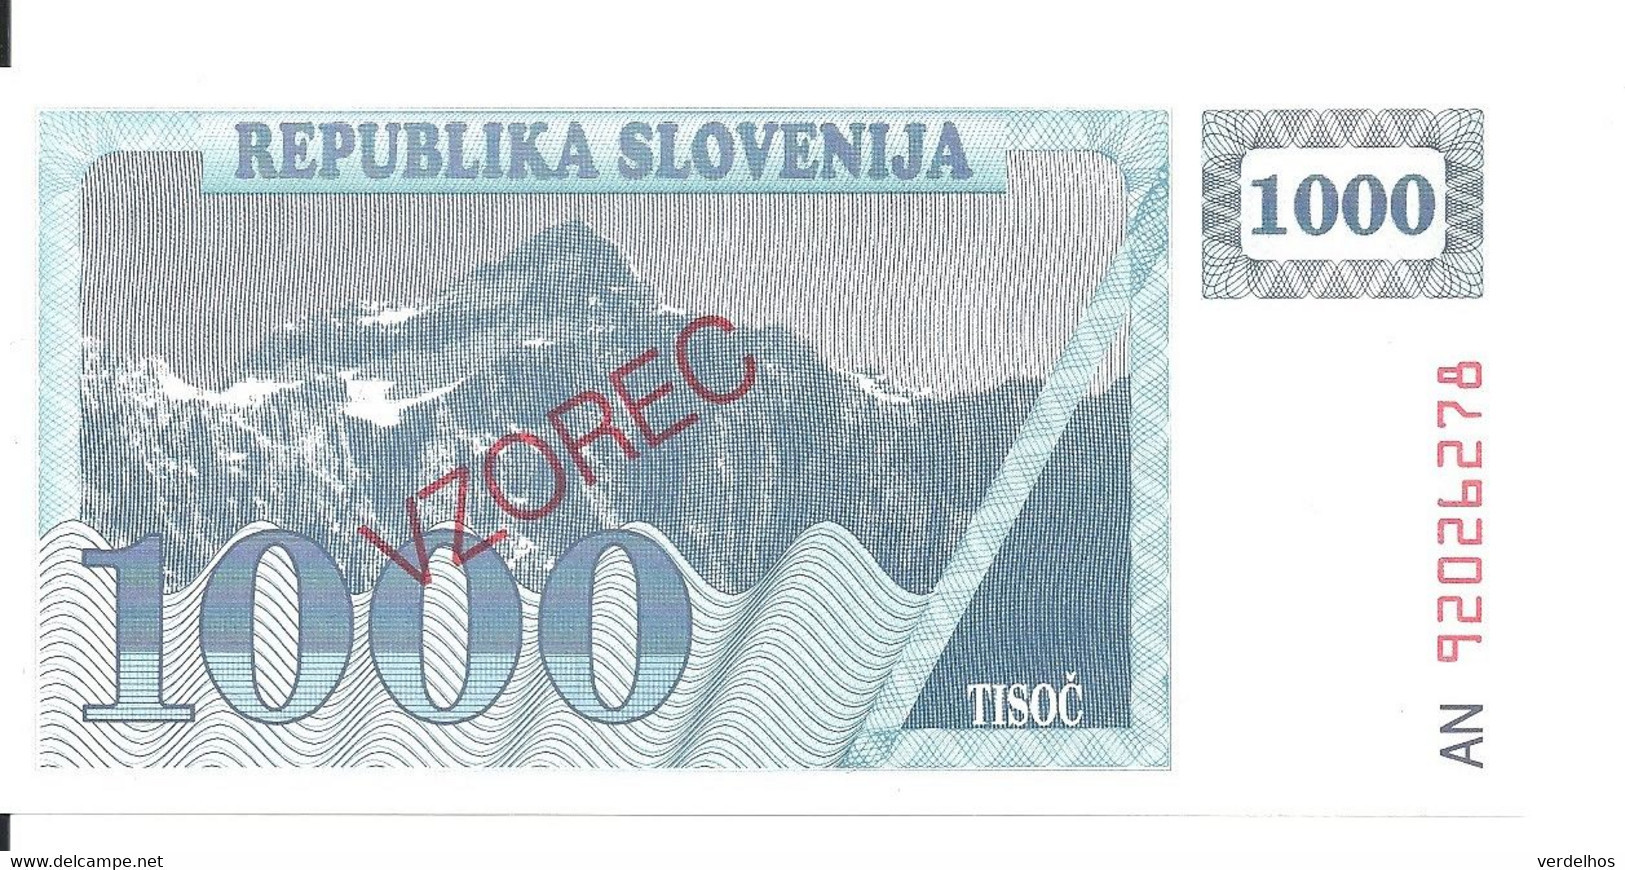 SLOVENIE 1000 TOLARJEV 1992 UNC P 9s1 - Slowenien